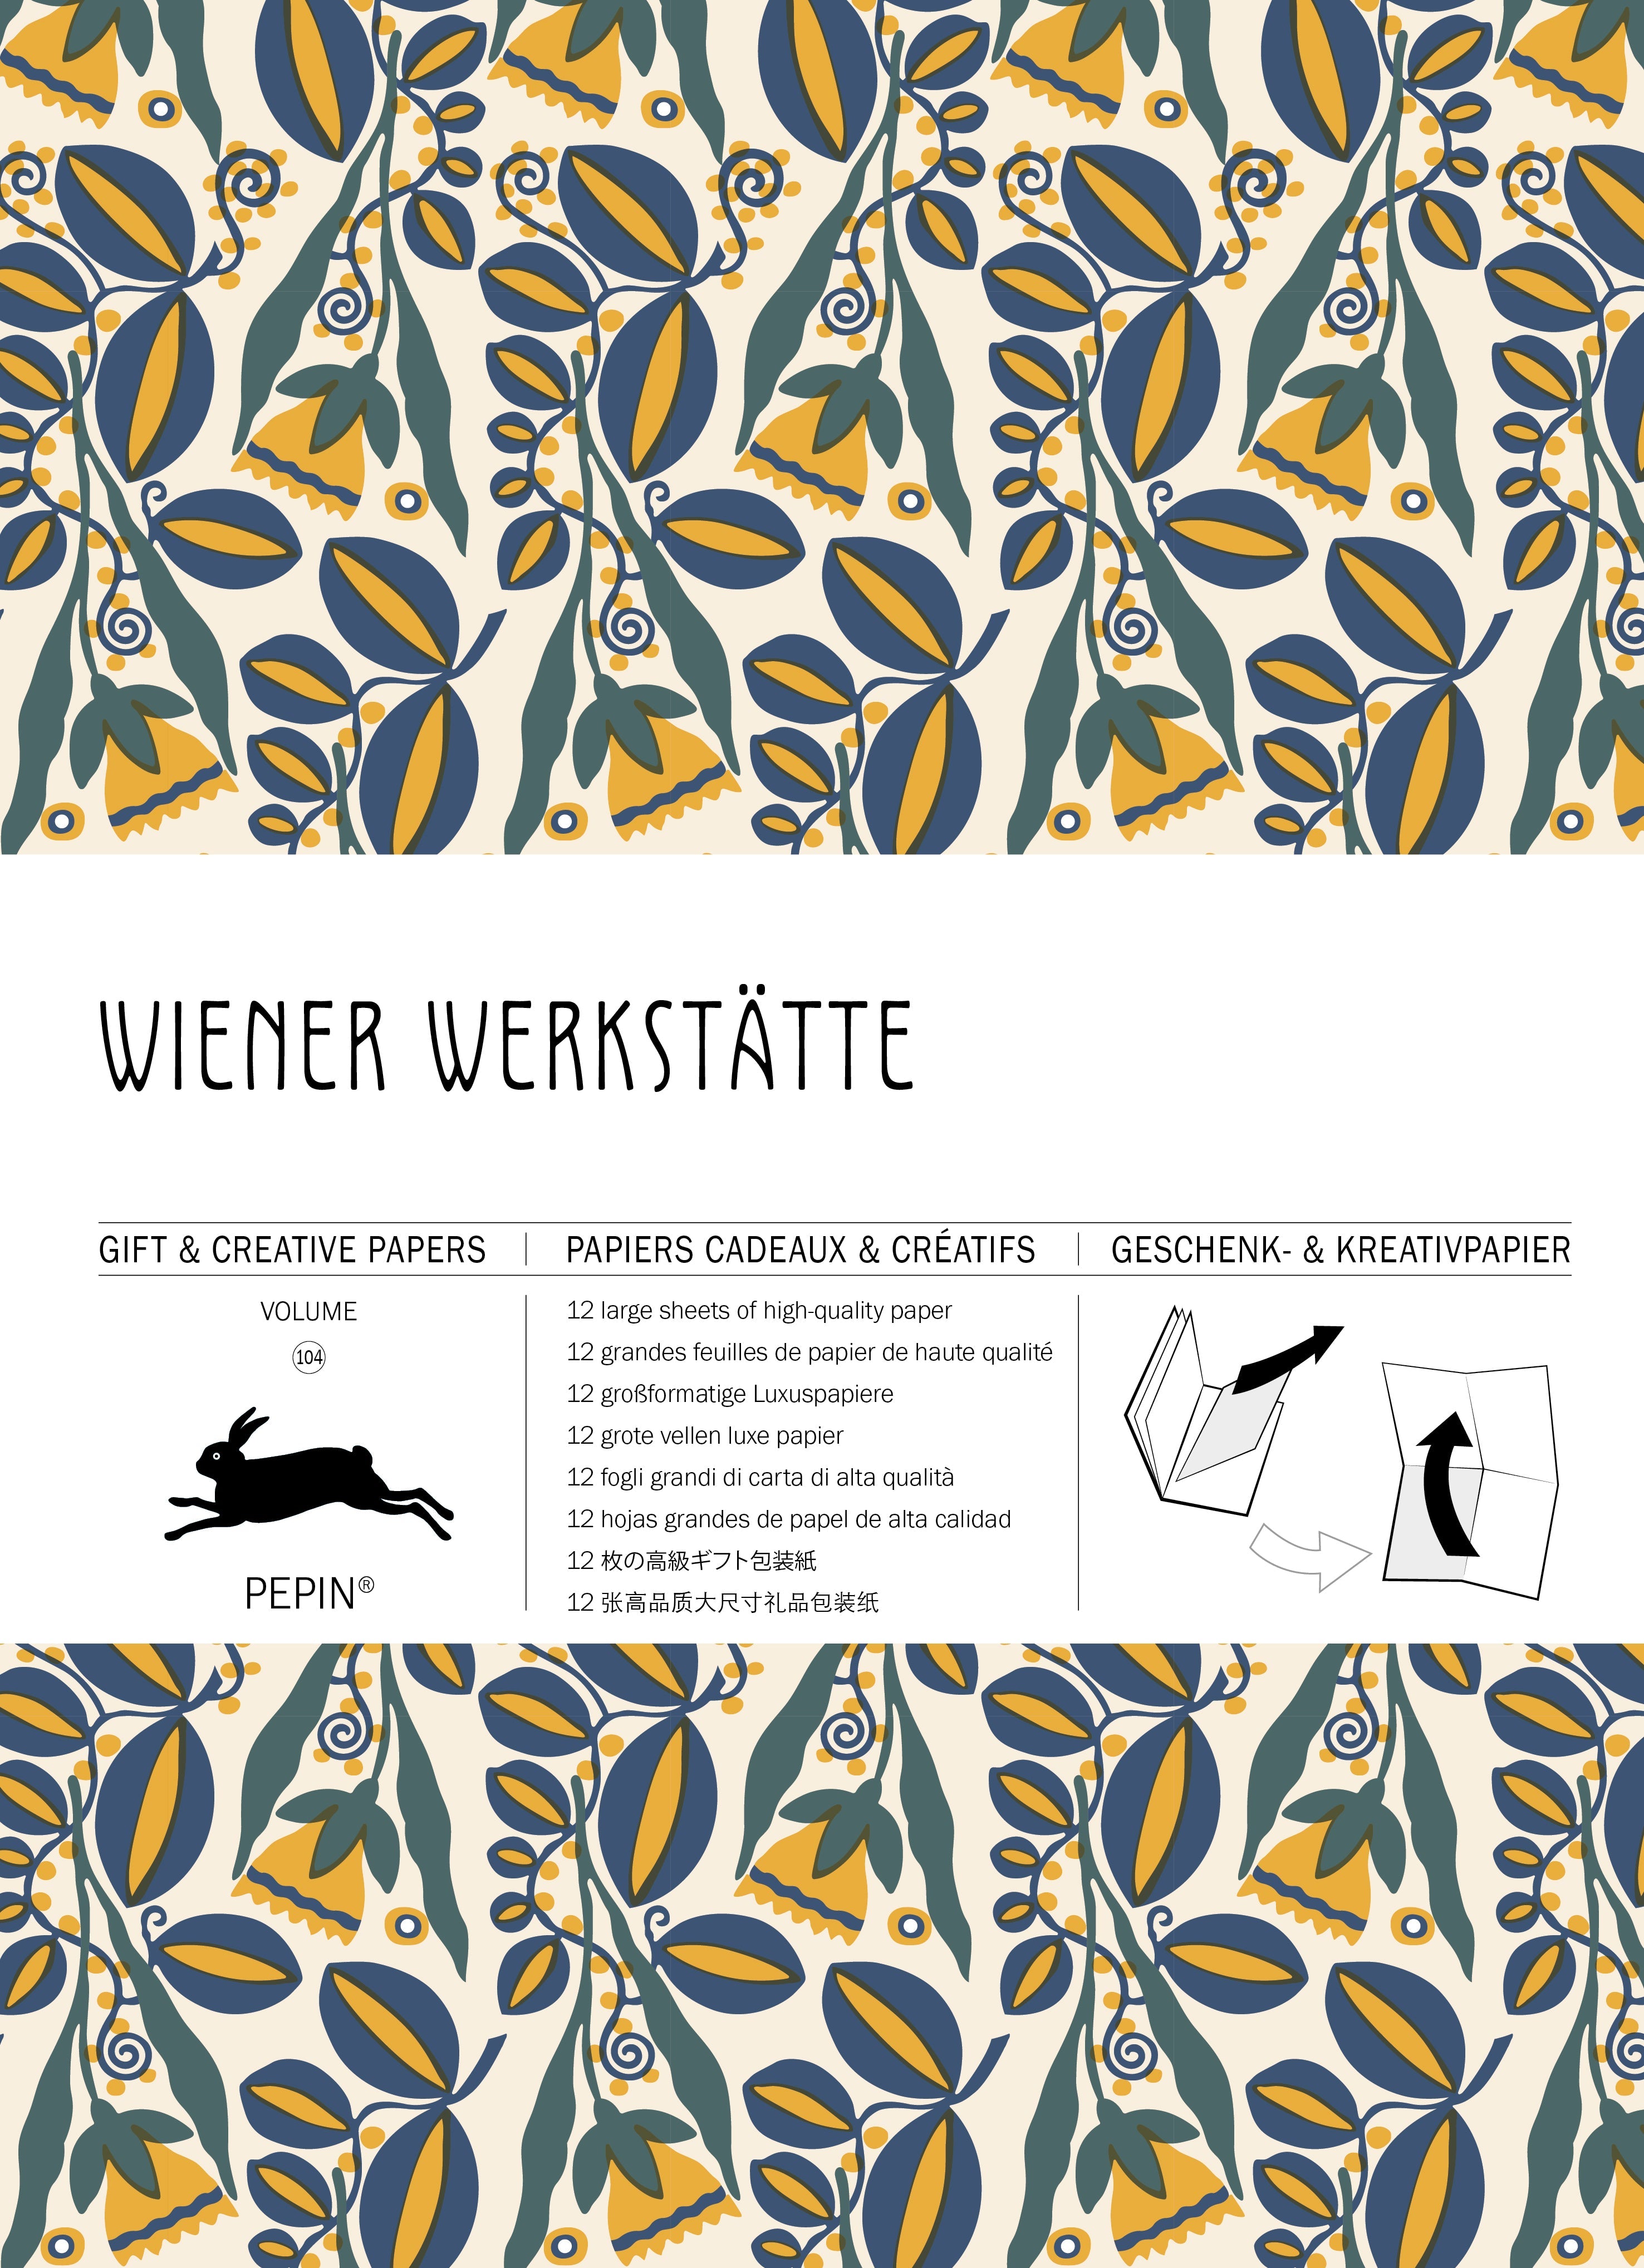 Gift & creative papers - Wiener Werkstaette